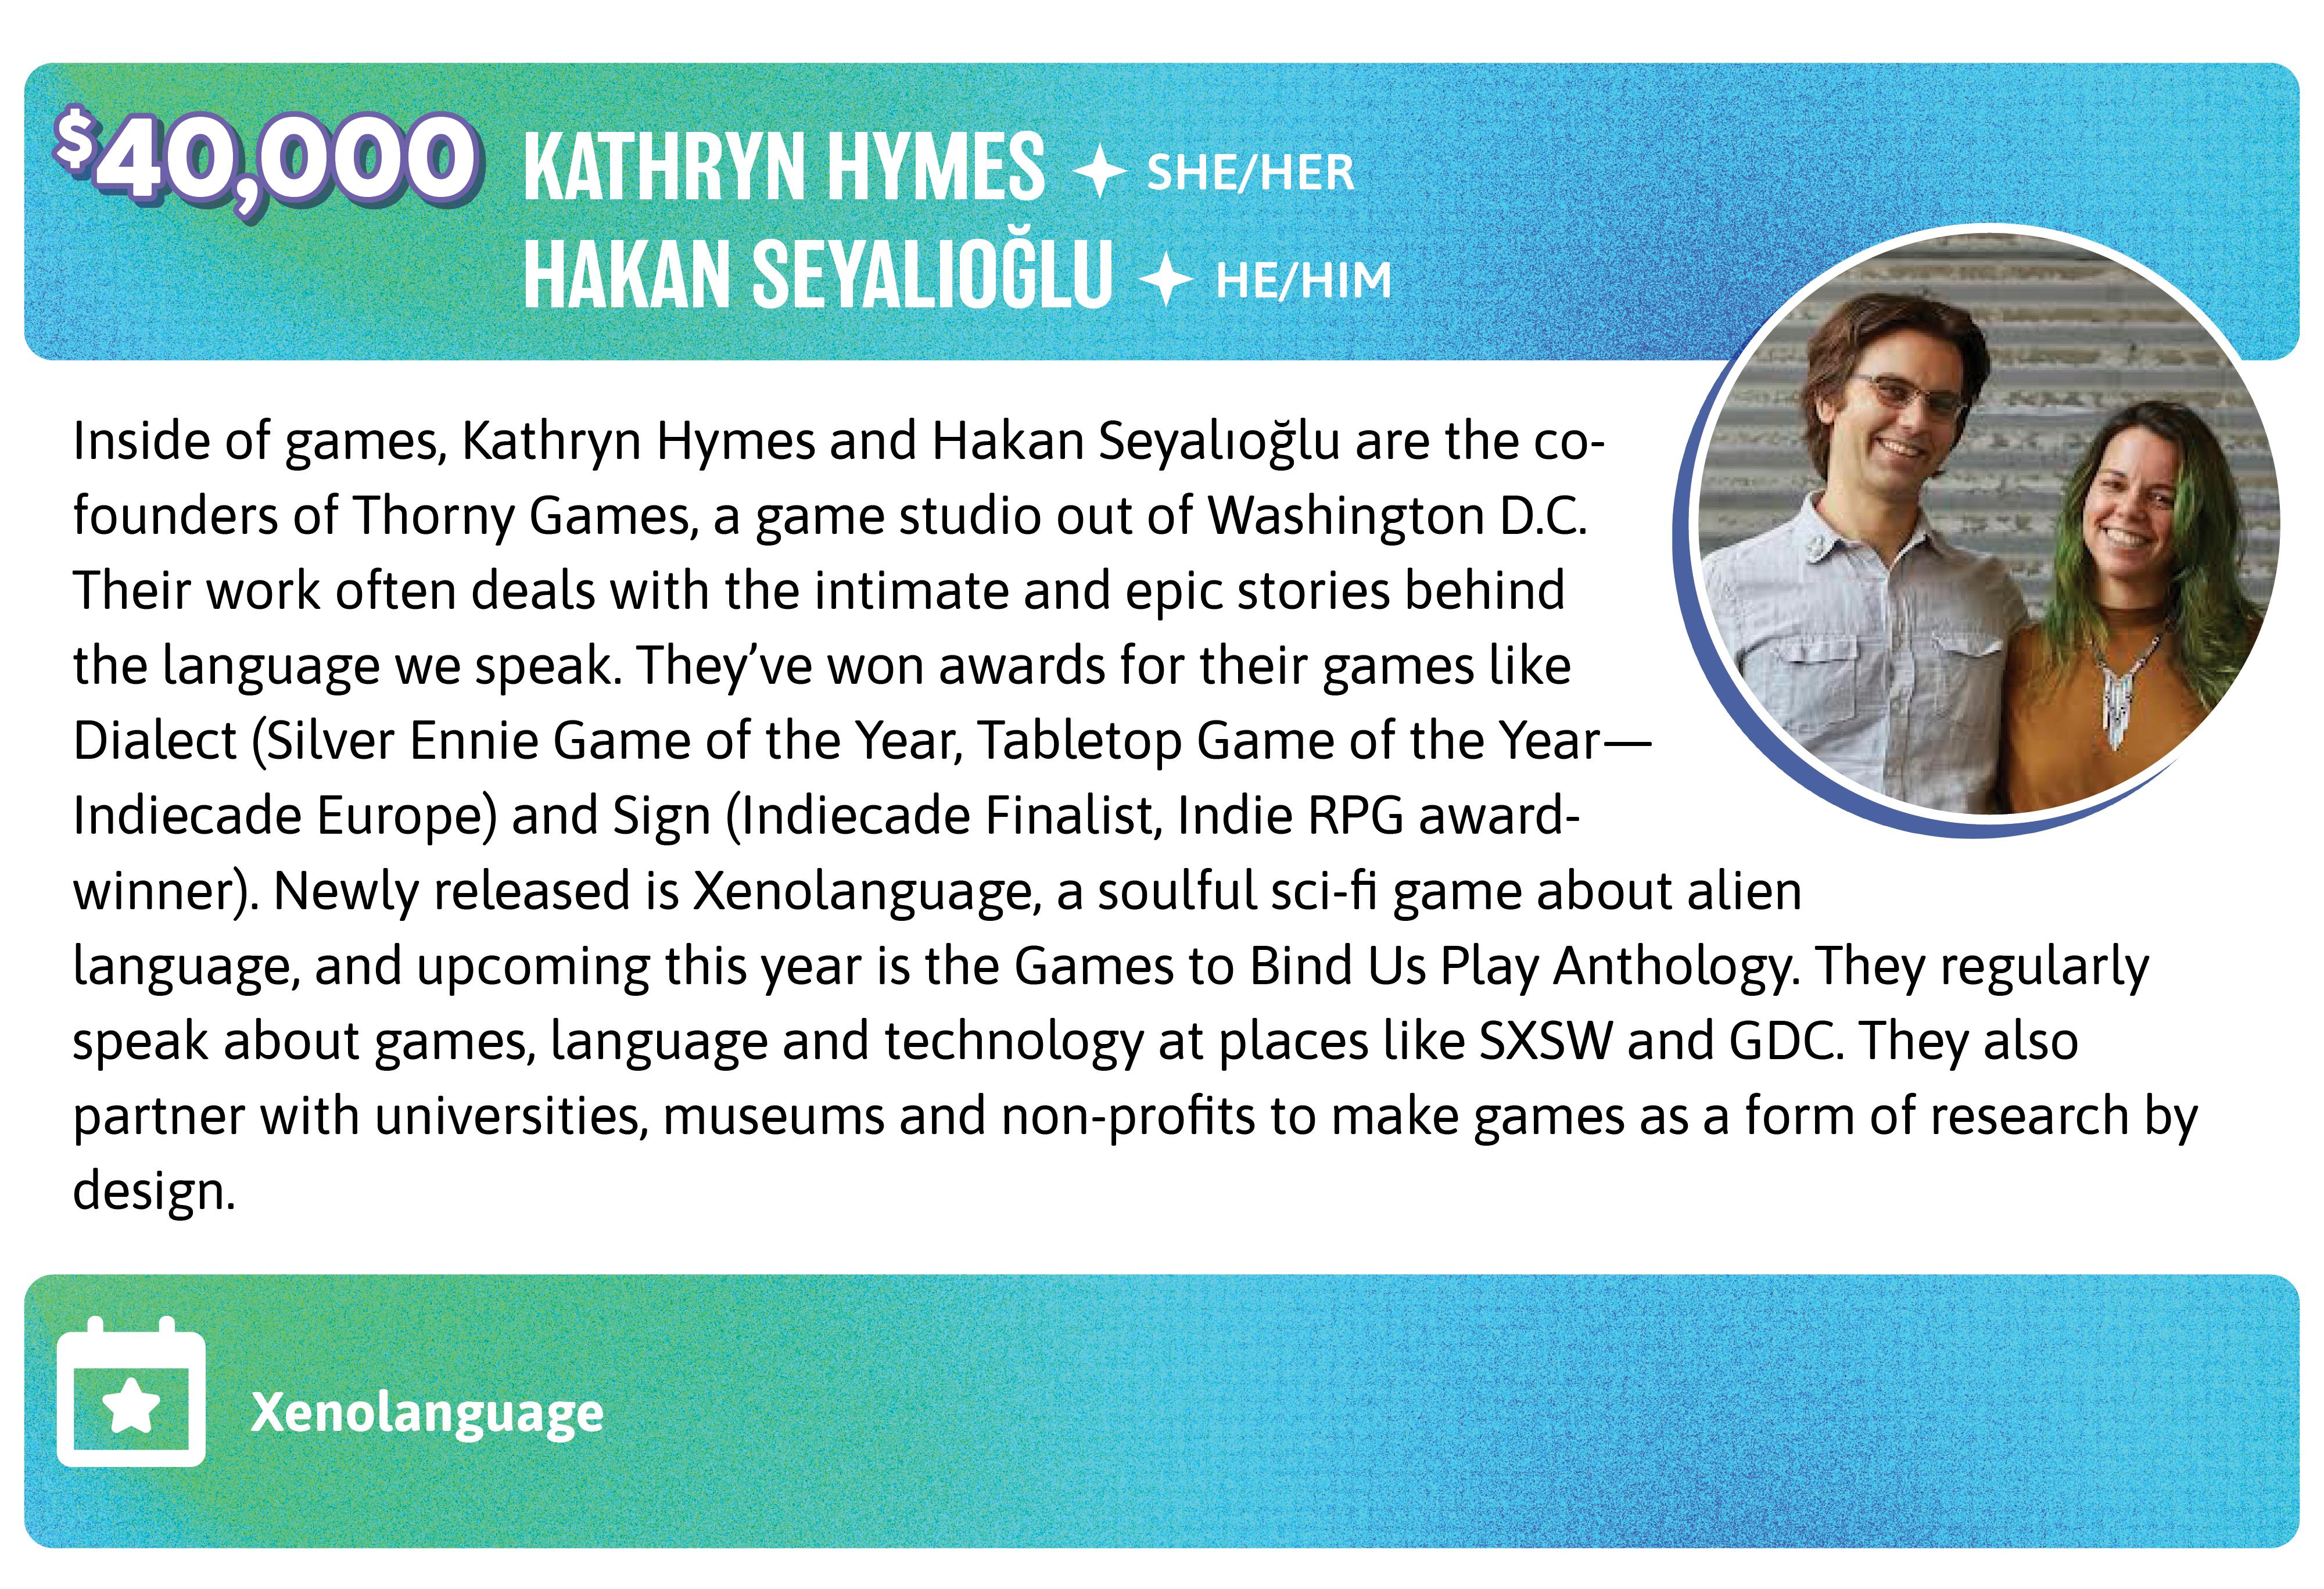 Kathryn Hymes and Hakan Seyalıoğlu (Thorny Games)